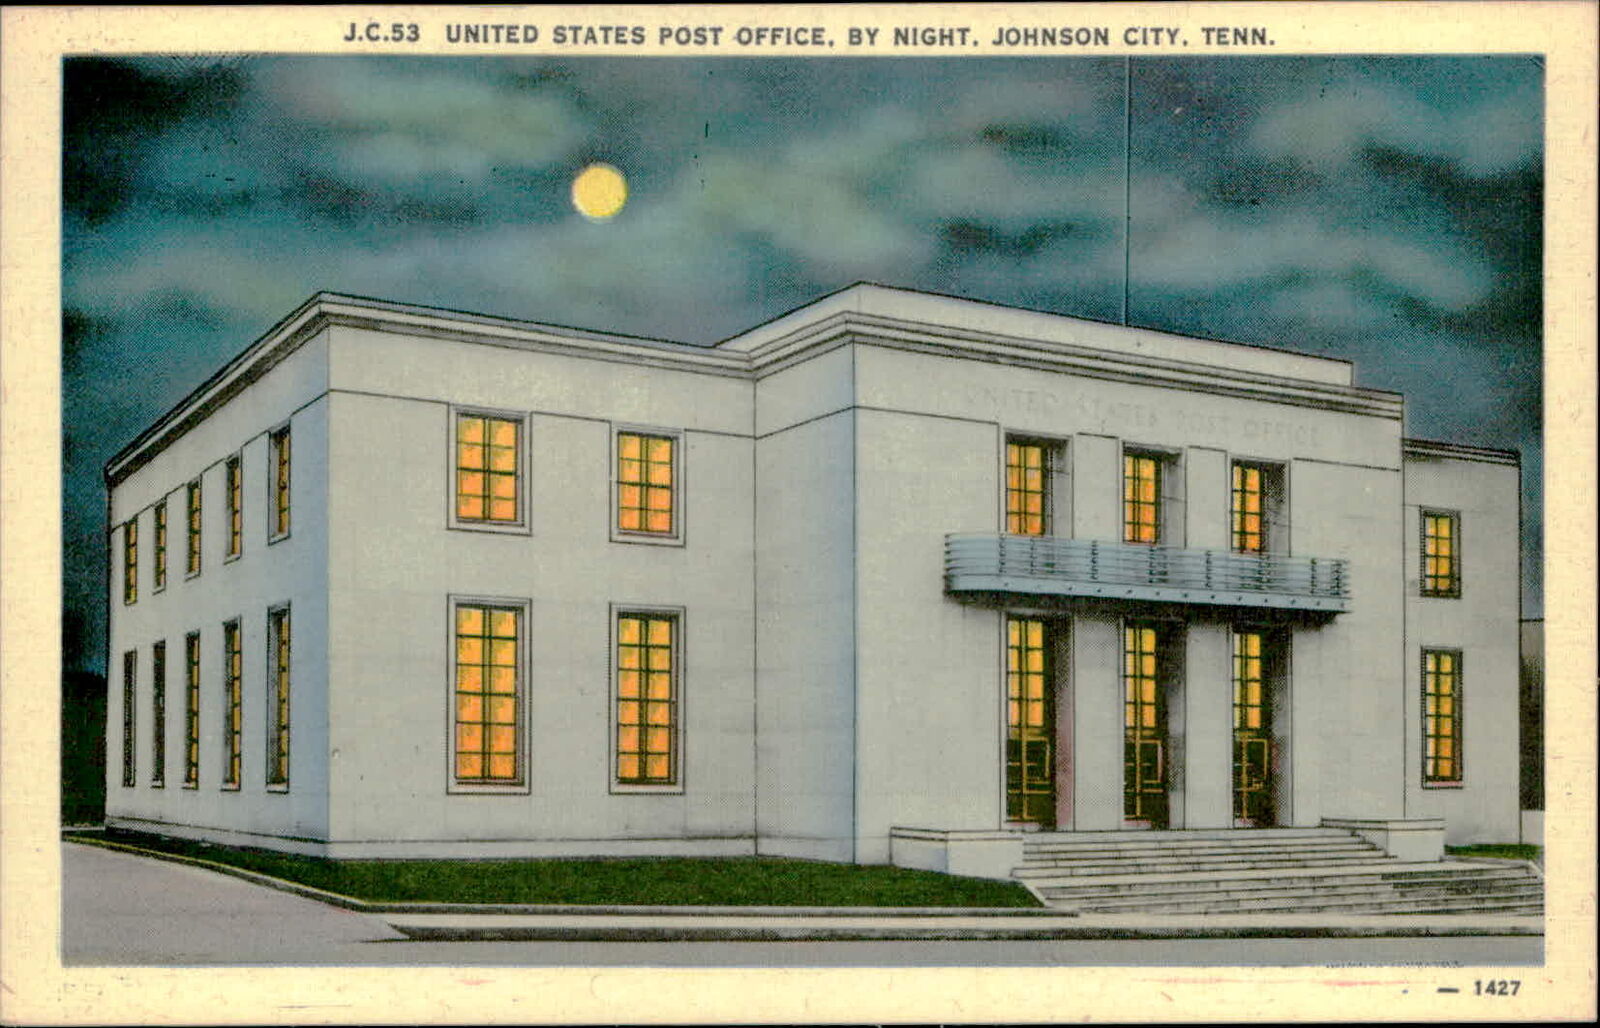 Postcard: J.C.53 UNITED STATES POST OFFICE, BY NIGHT. JOHNSON CITY. TE